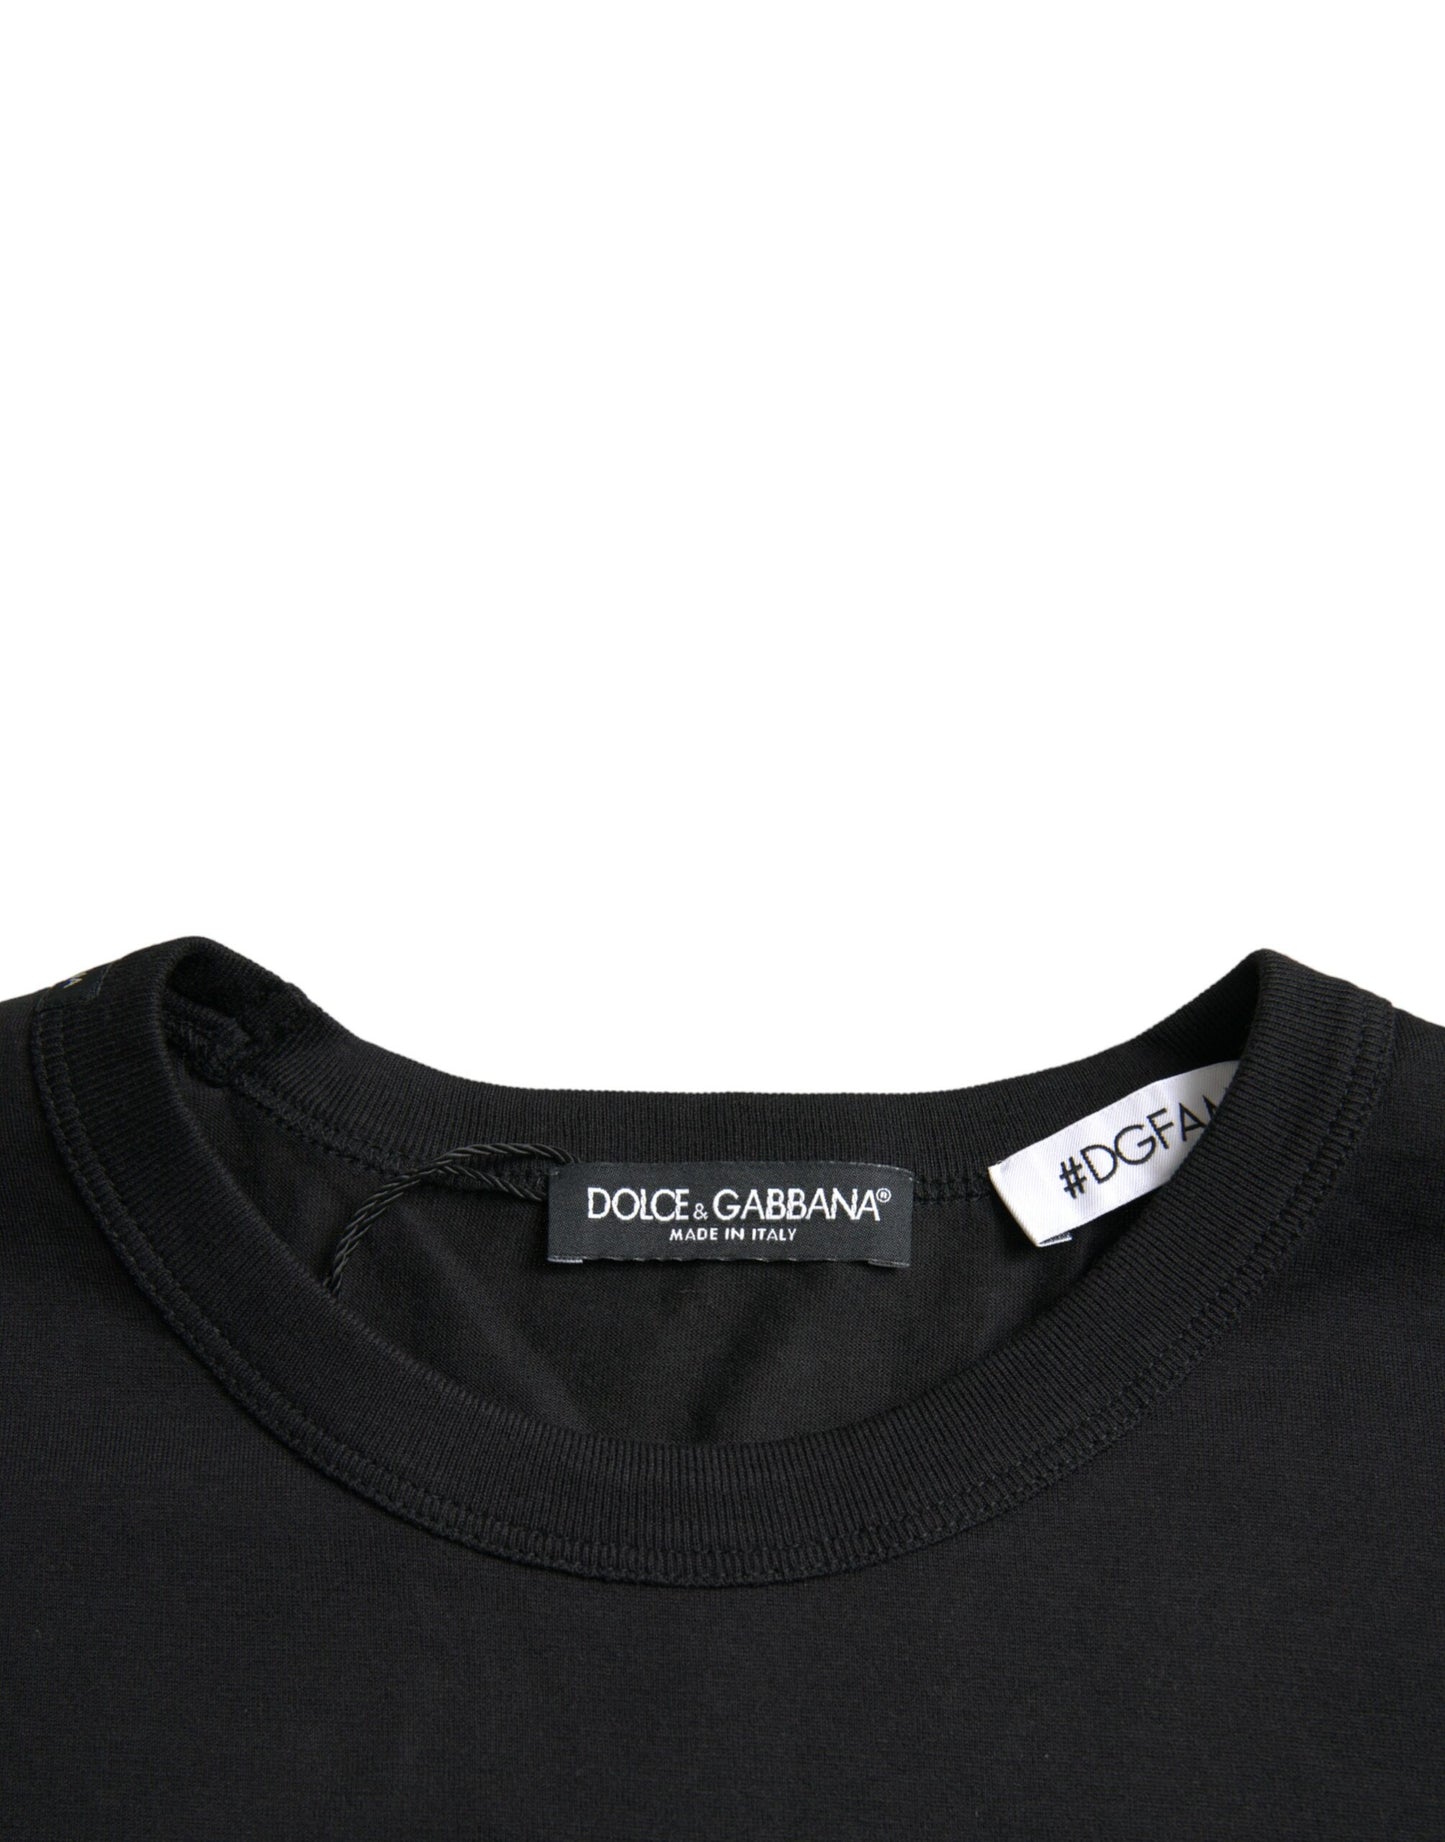 Dolce & Gabbana Black #DGFamily Cotton Crew Neck T-shirt